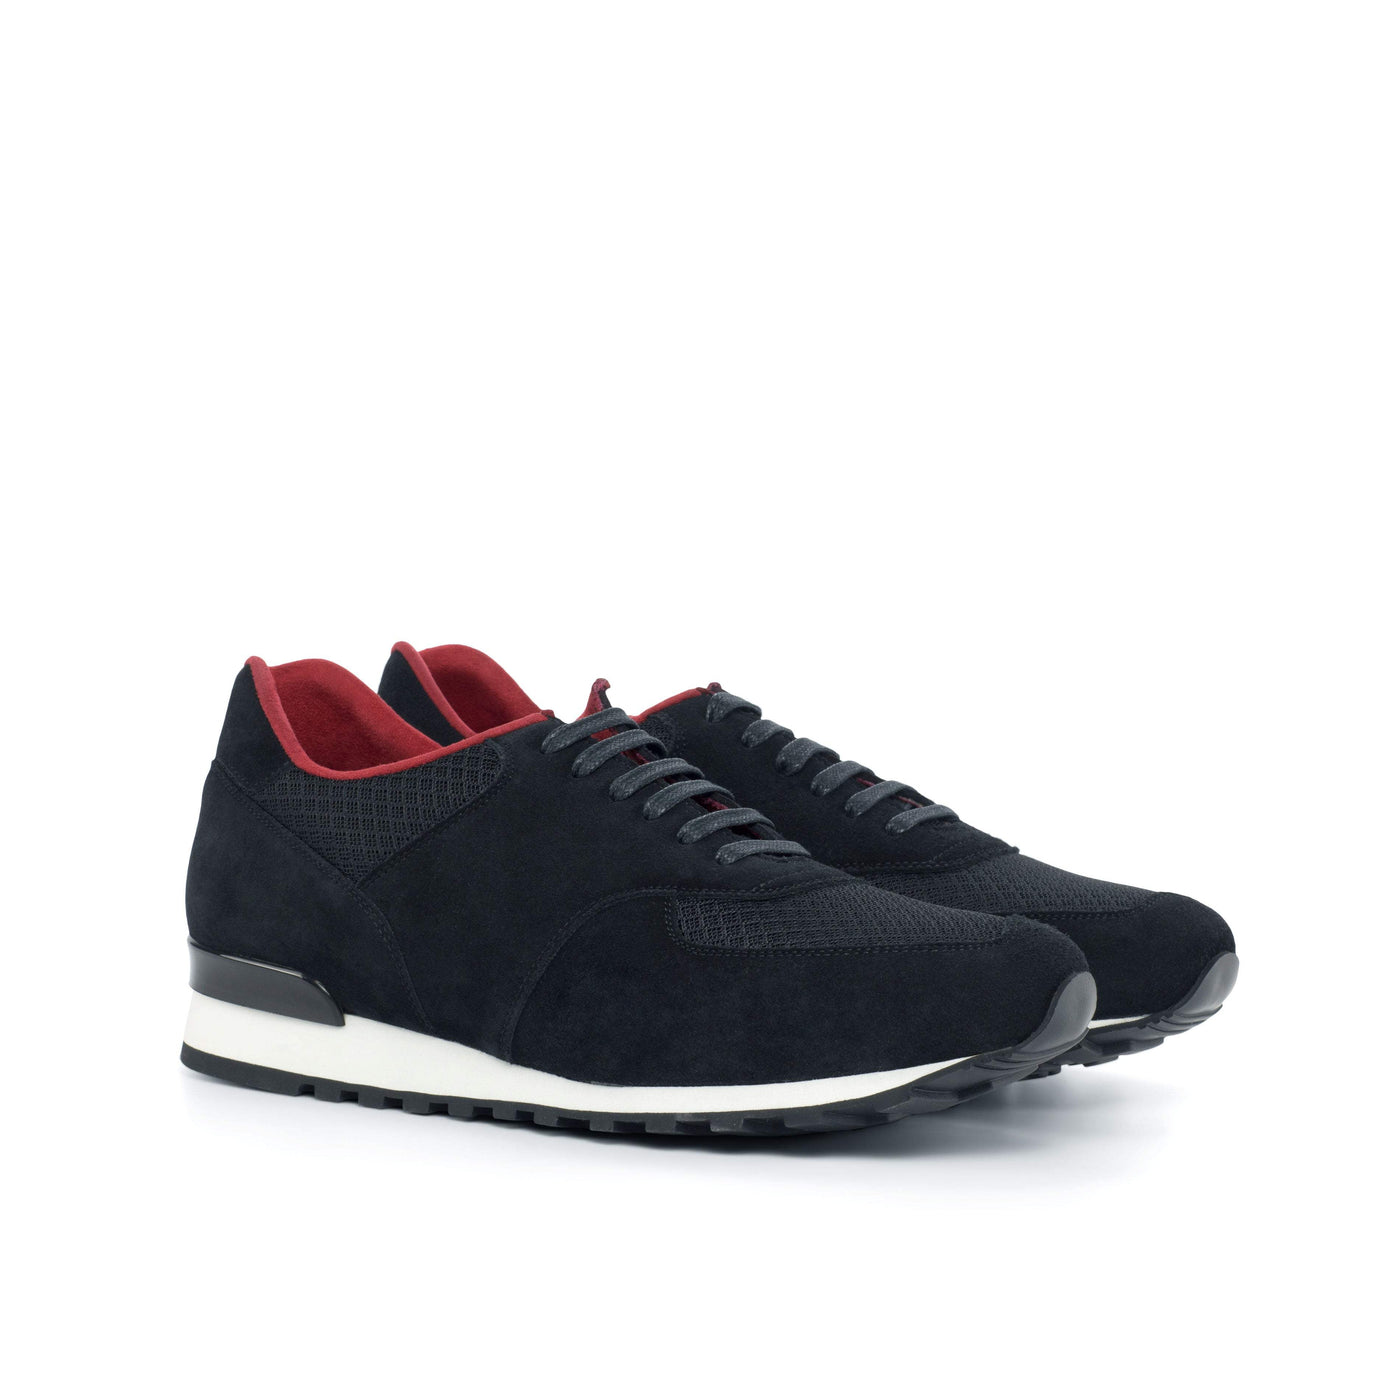 Men's Jogger Sneakers Leather Black 4517 3- MERRIMIUM